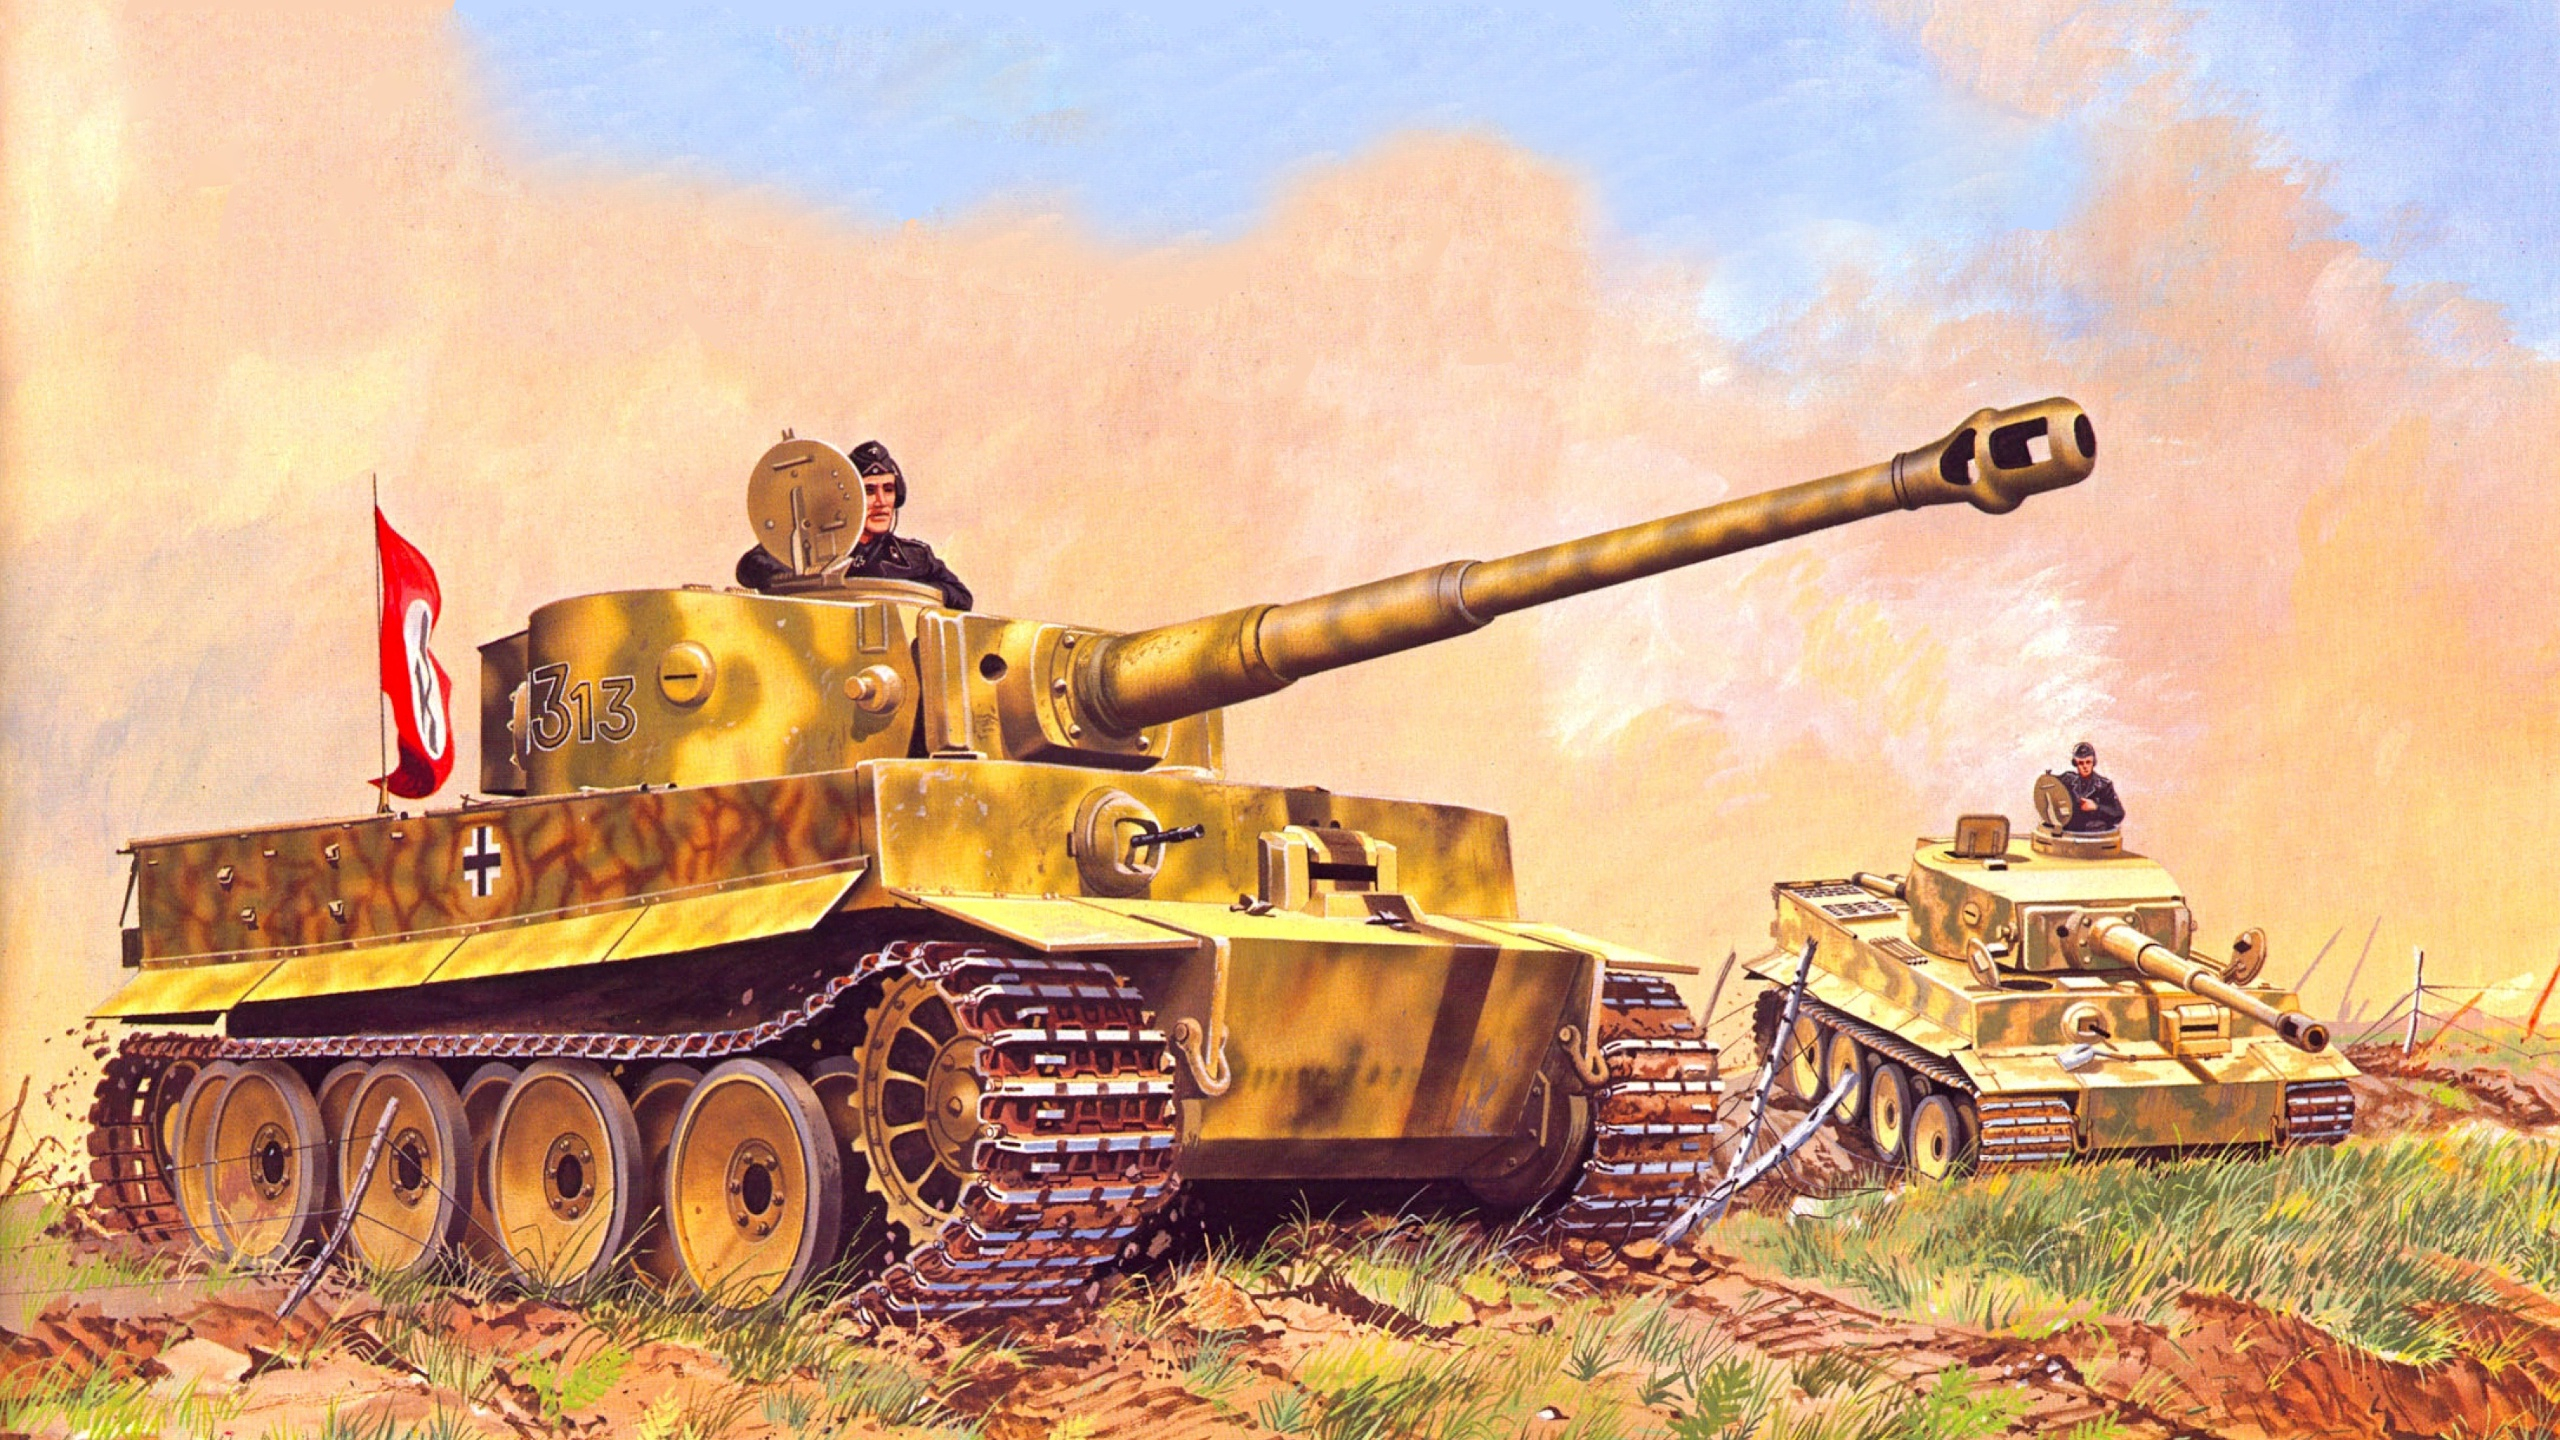 Год тигра немецкий танк. Танк тигр Великой Отечественной войны. Танк тигр 2. Танк тигр 2 мировой войны. Немецкие танки 2 мировой войны тигр.